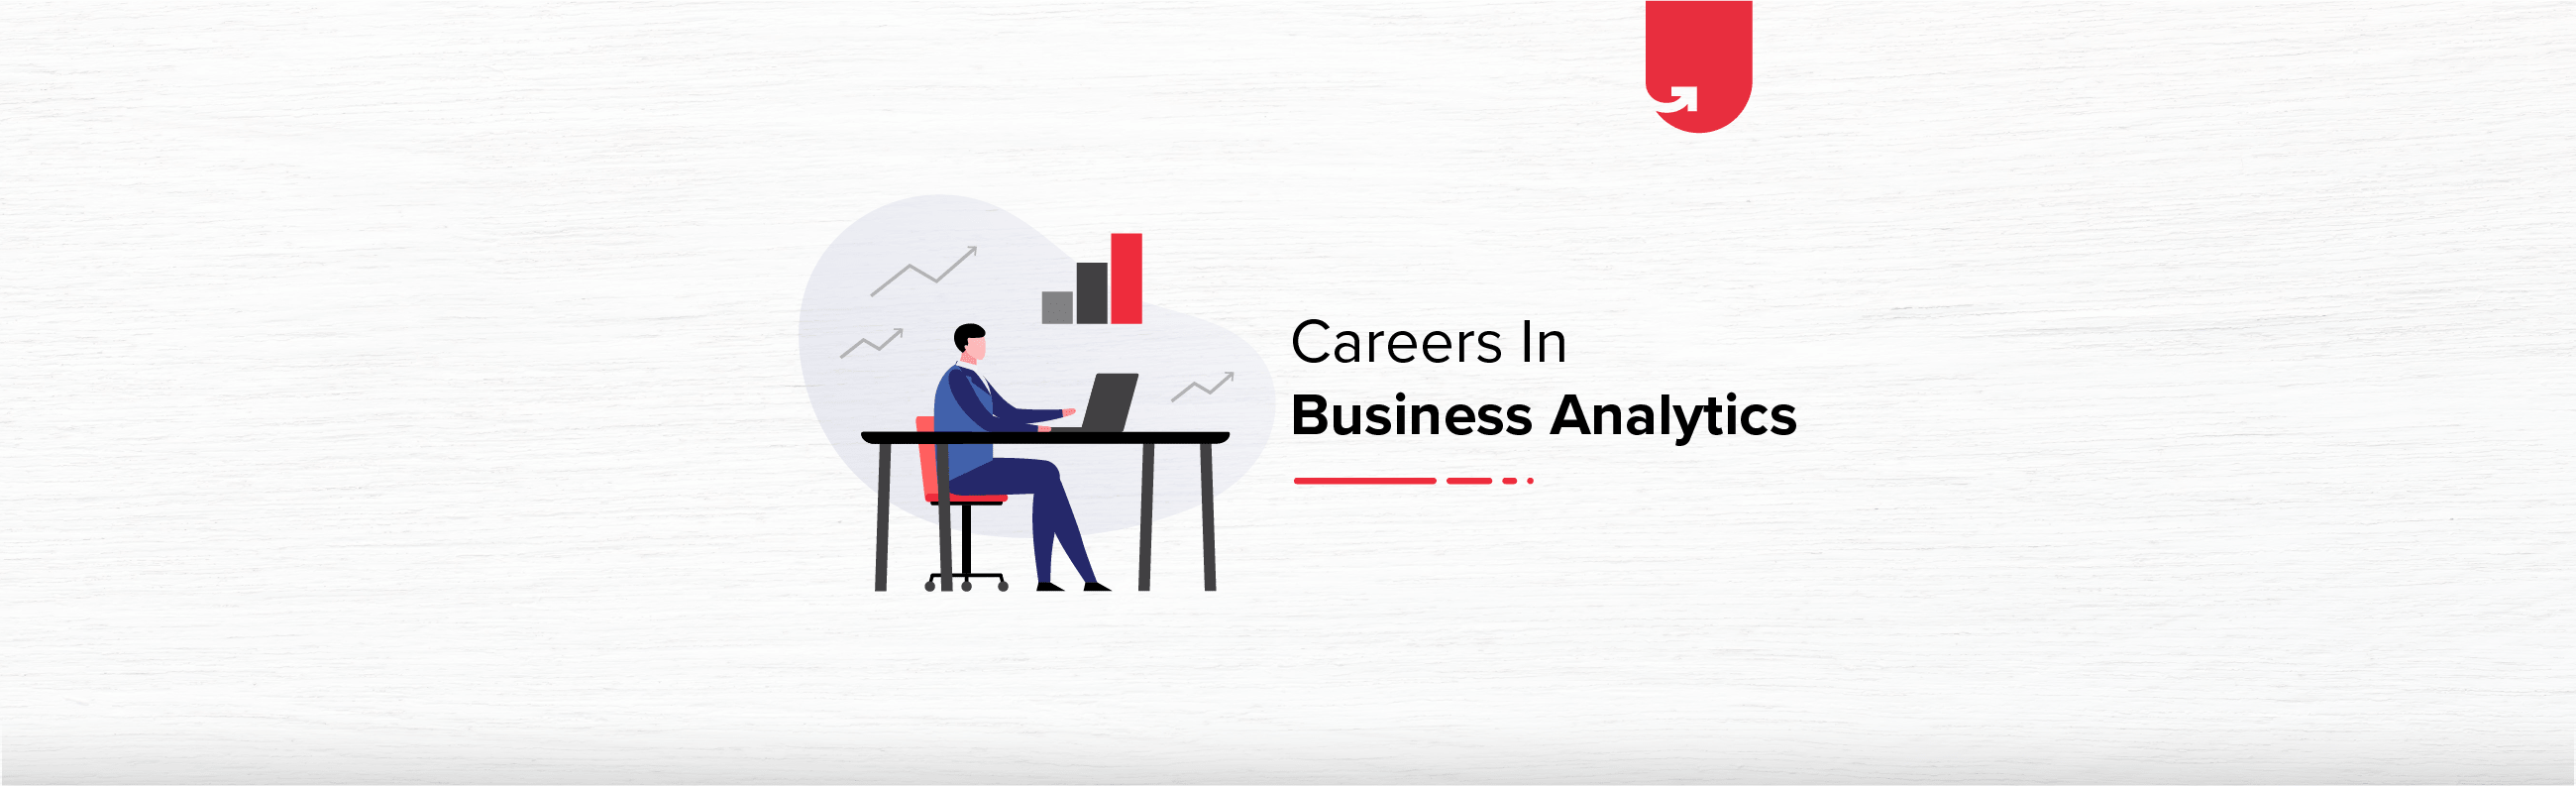 Career Options in Business Analytics | upGrad blog